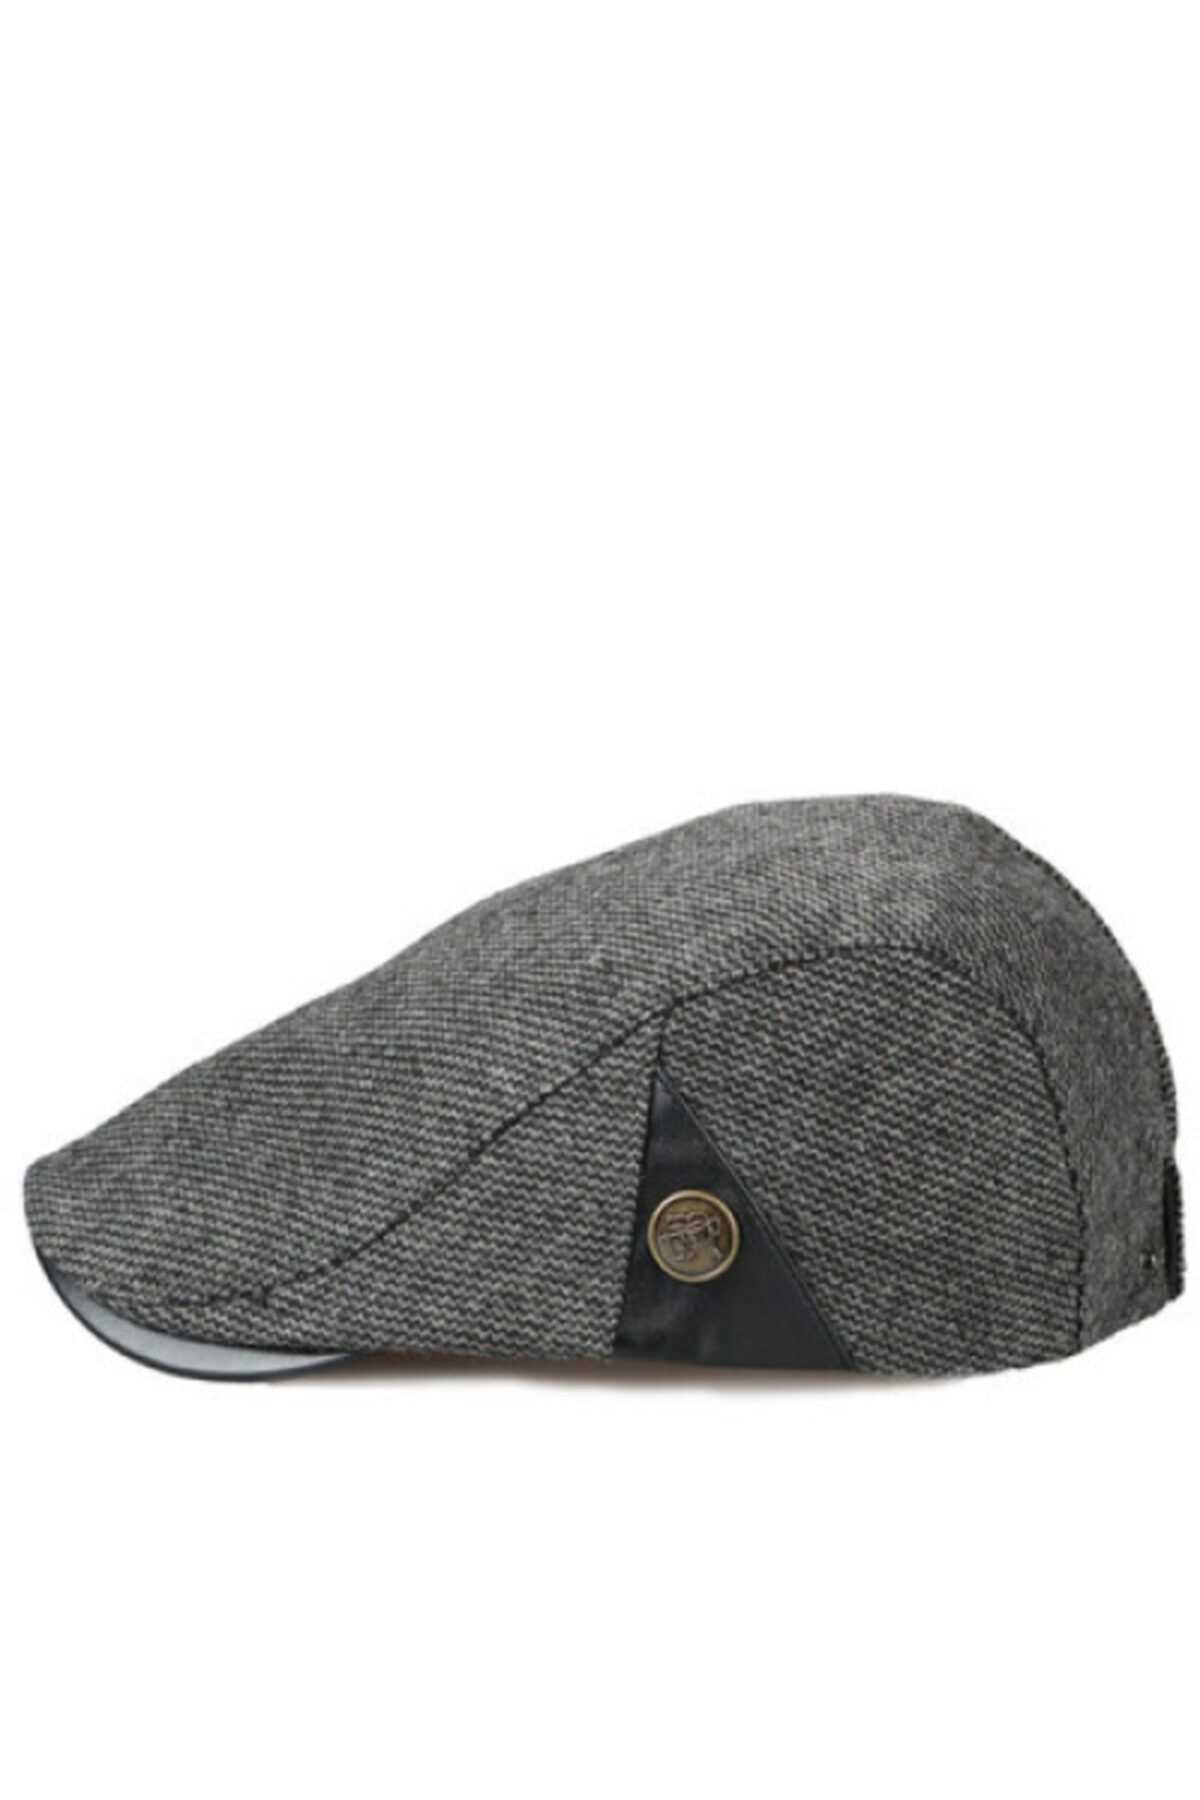 کلاه اصل برند CosmoOutlet رنگ نقره ای کد ty52398464